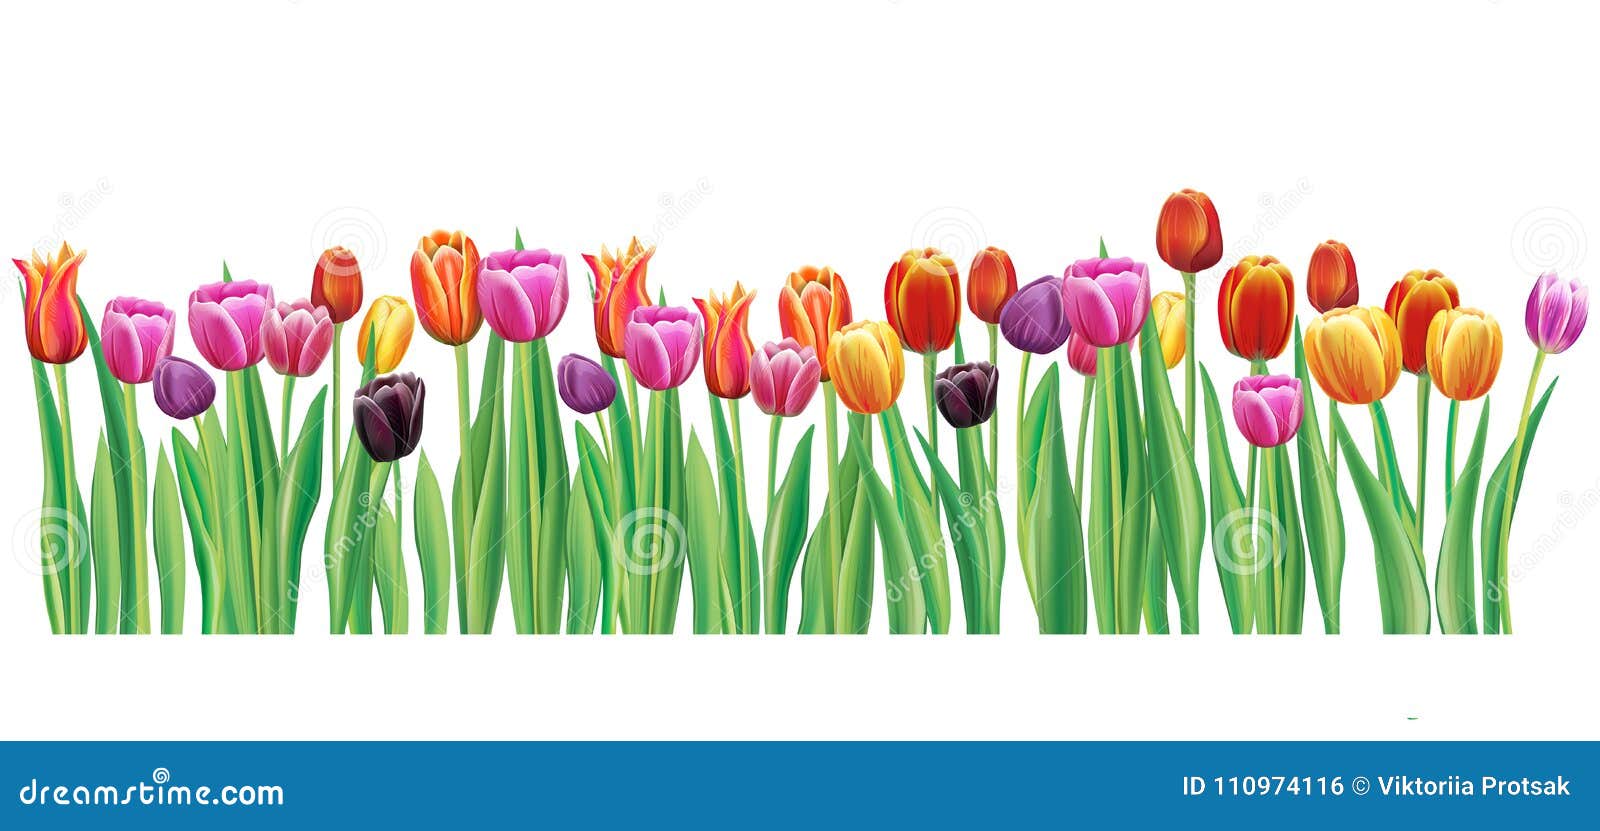 border with multicolor  tulips